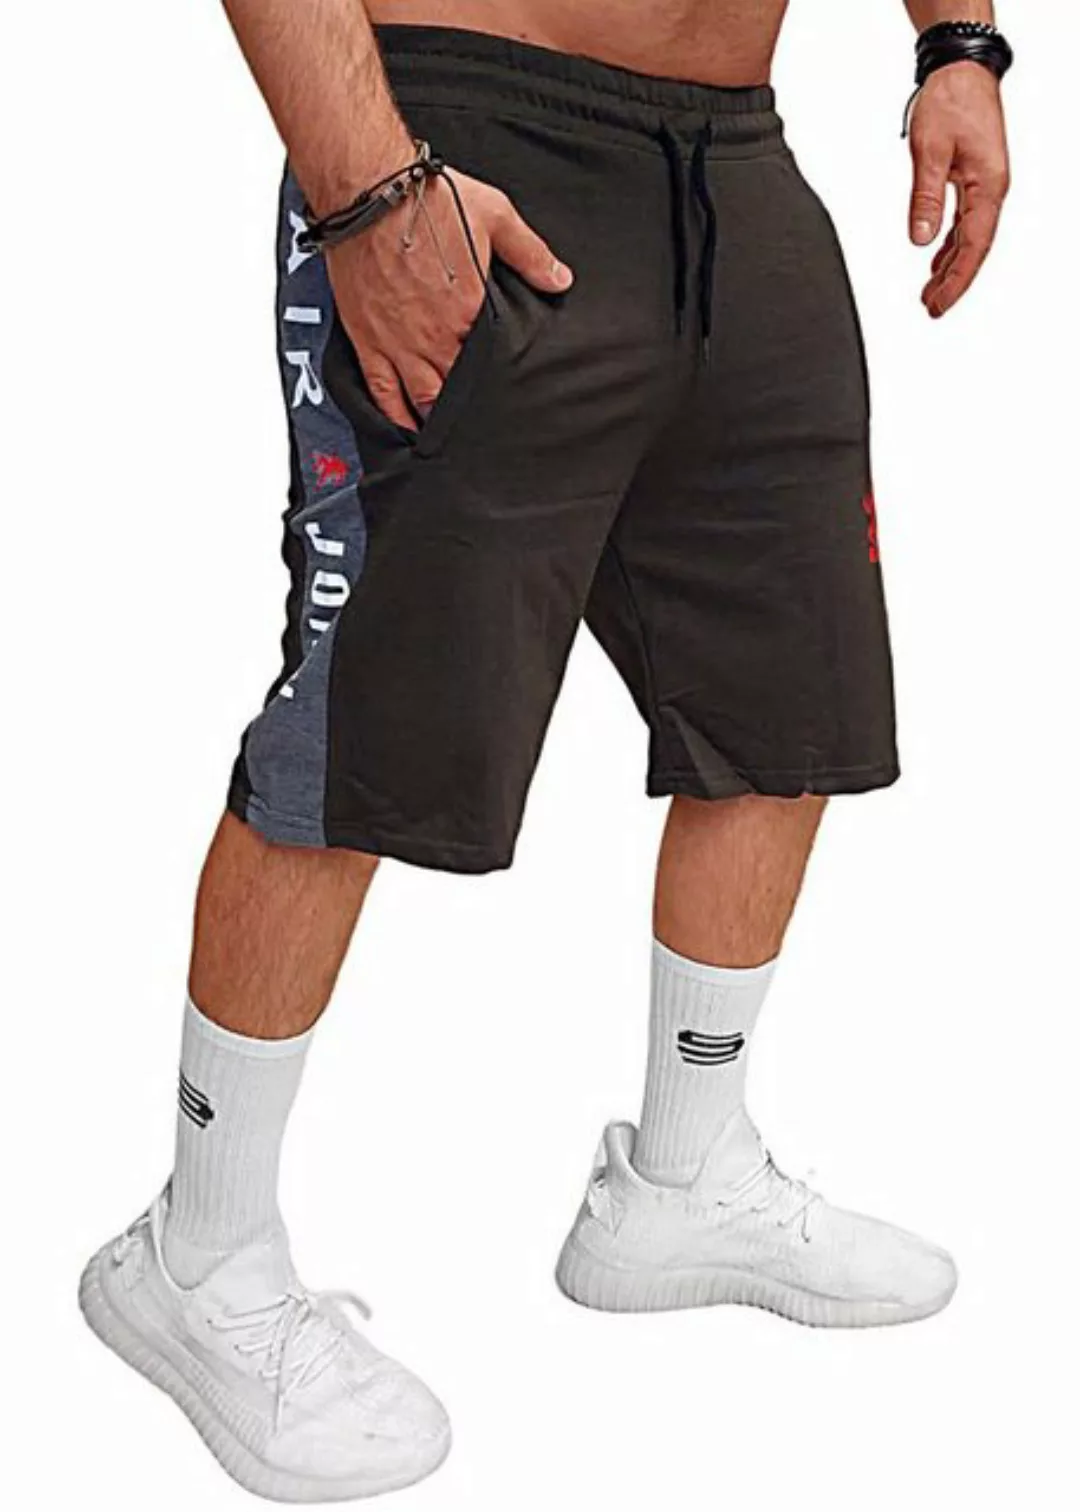 RMK Shorts Herren Short shorts Bermuda 3/4 sport Fitness uni tarn Capri Hos günstig online kaufen